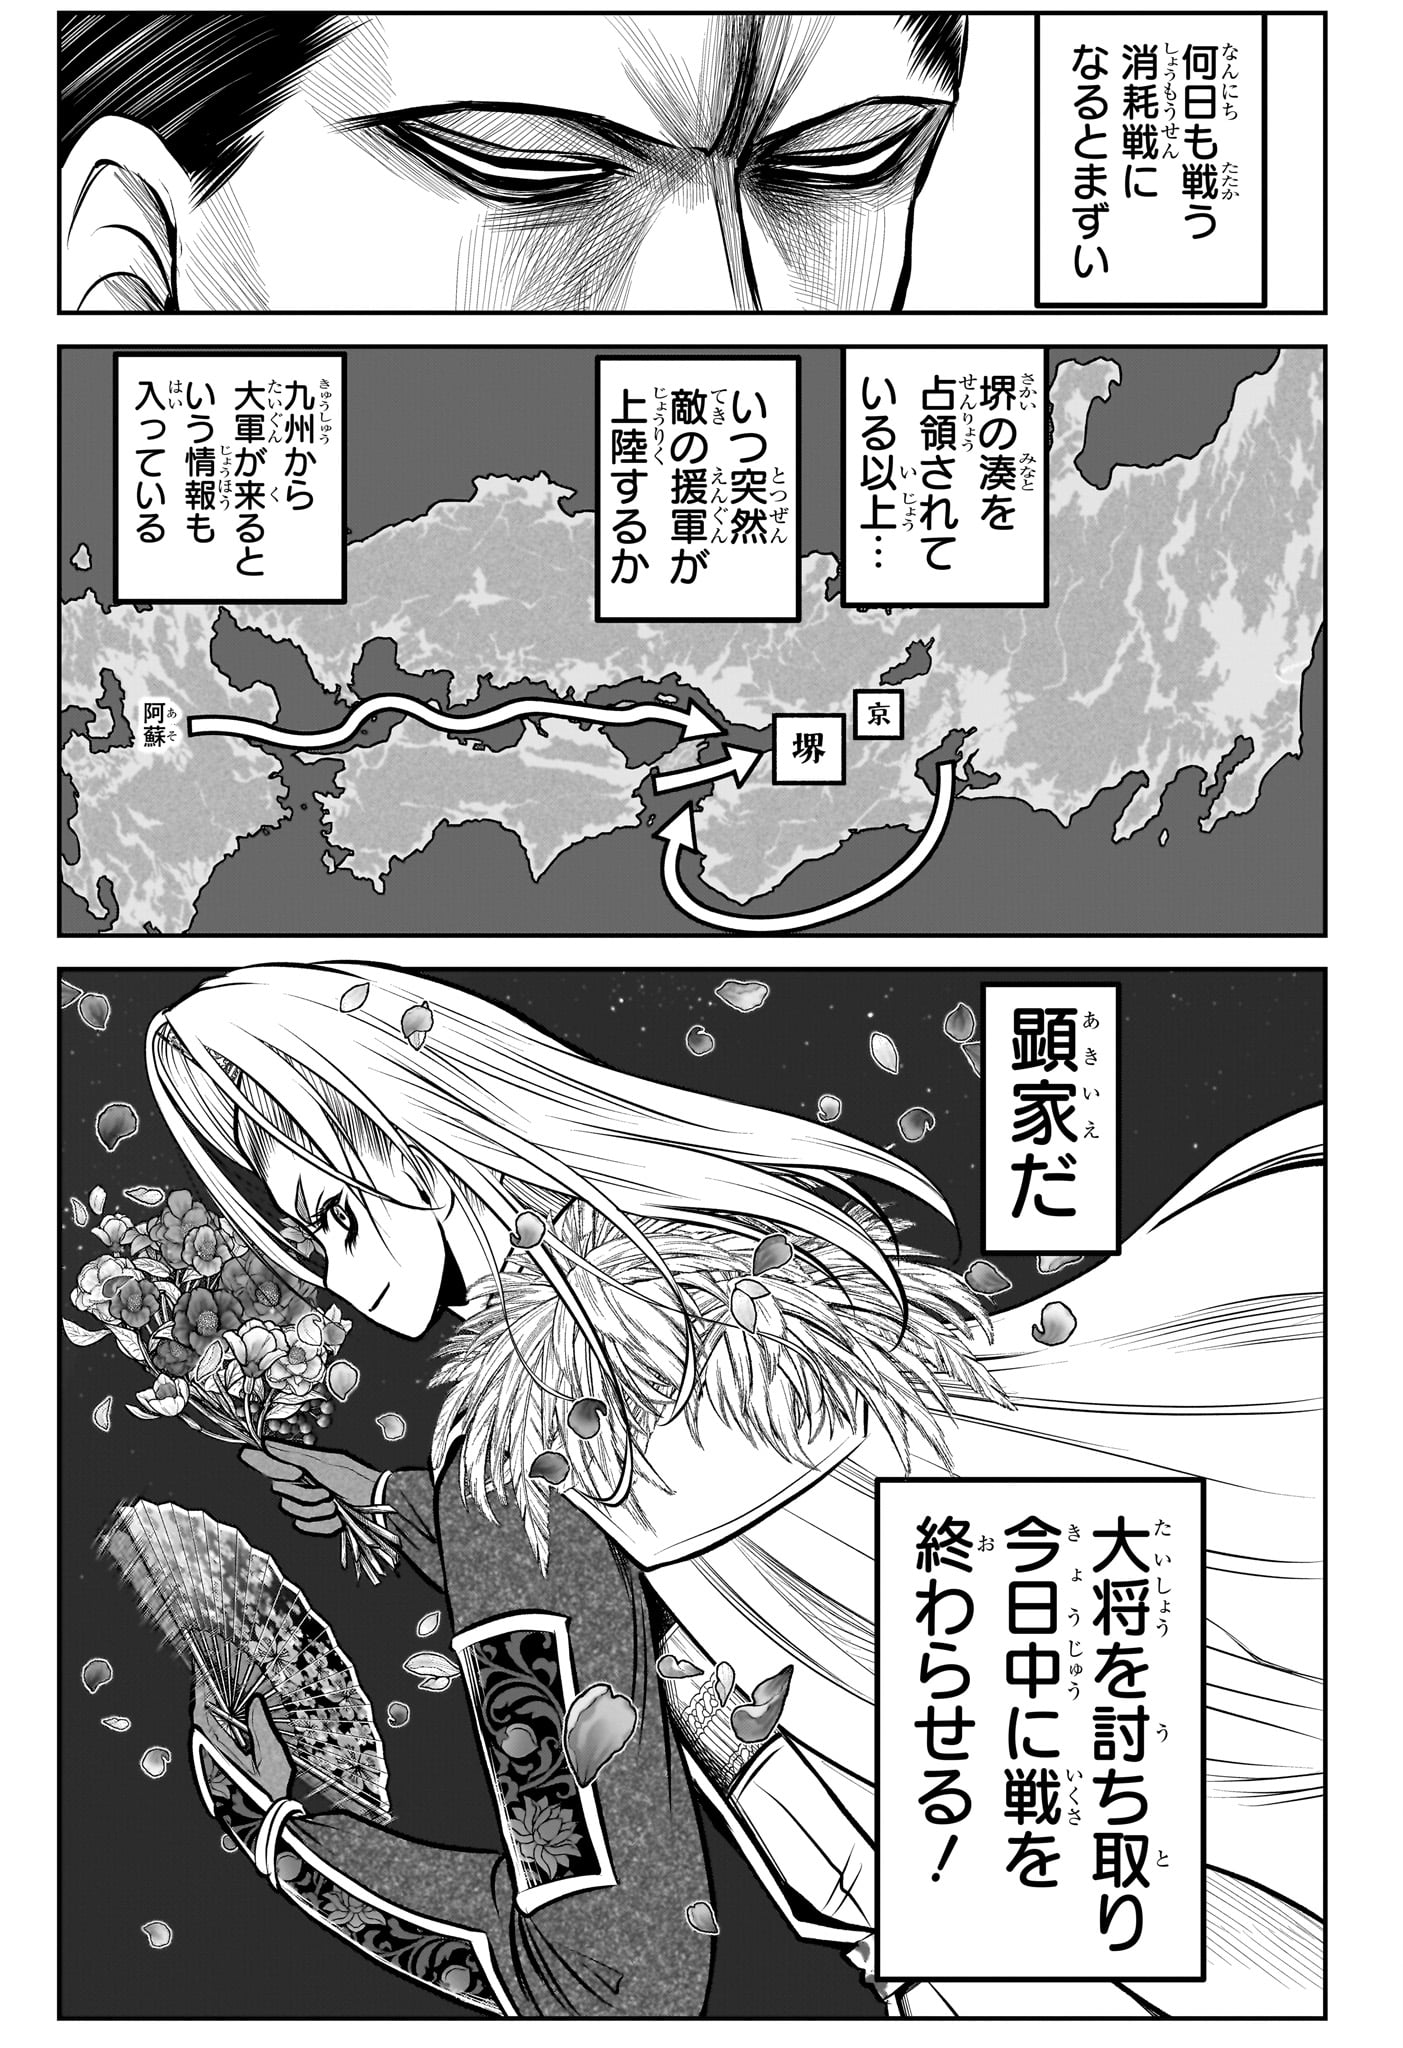 Nige Jouzu no Wakagimi - Chapter 161 - Page 17